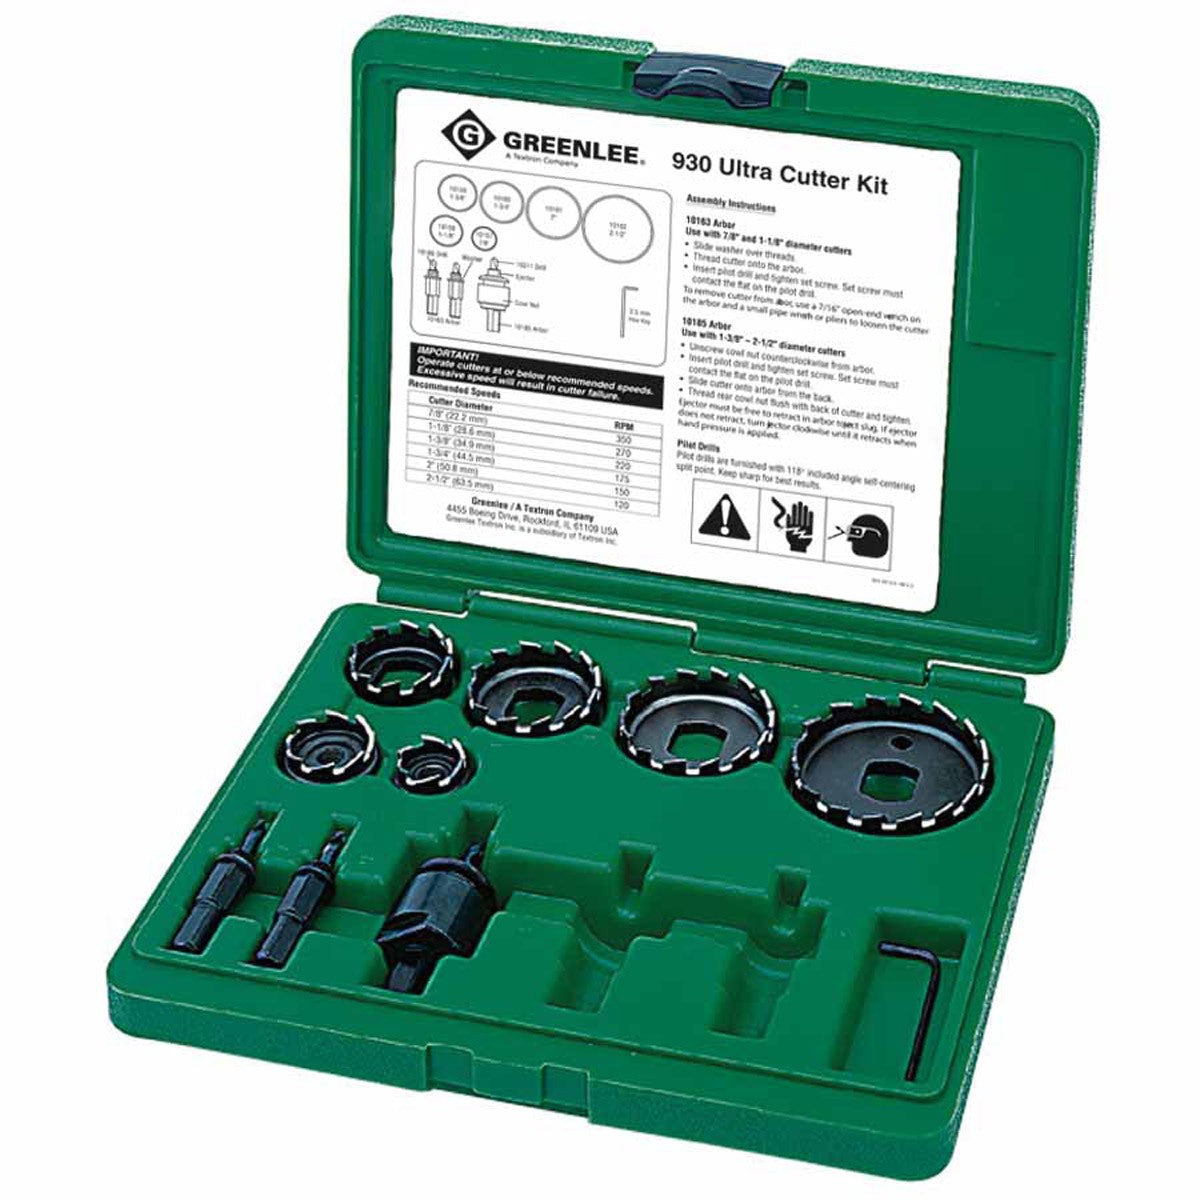 Greenlee 930 Ultra Cutter Kit